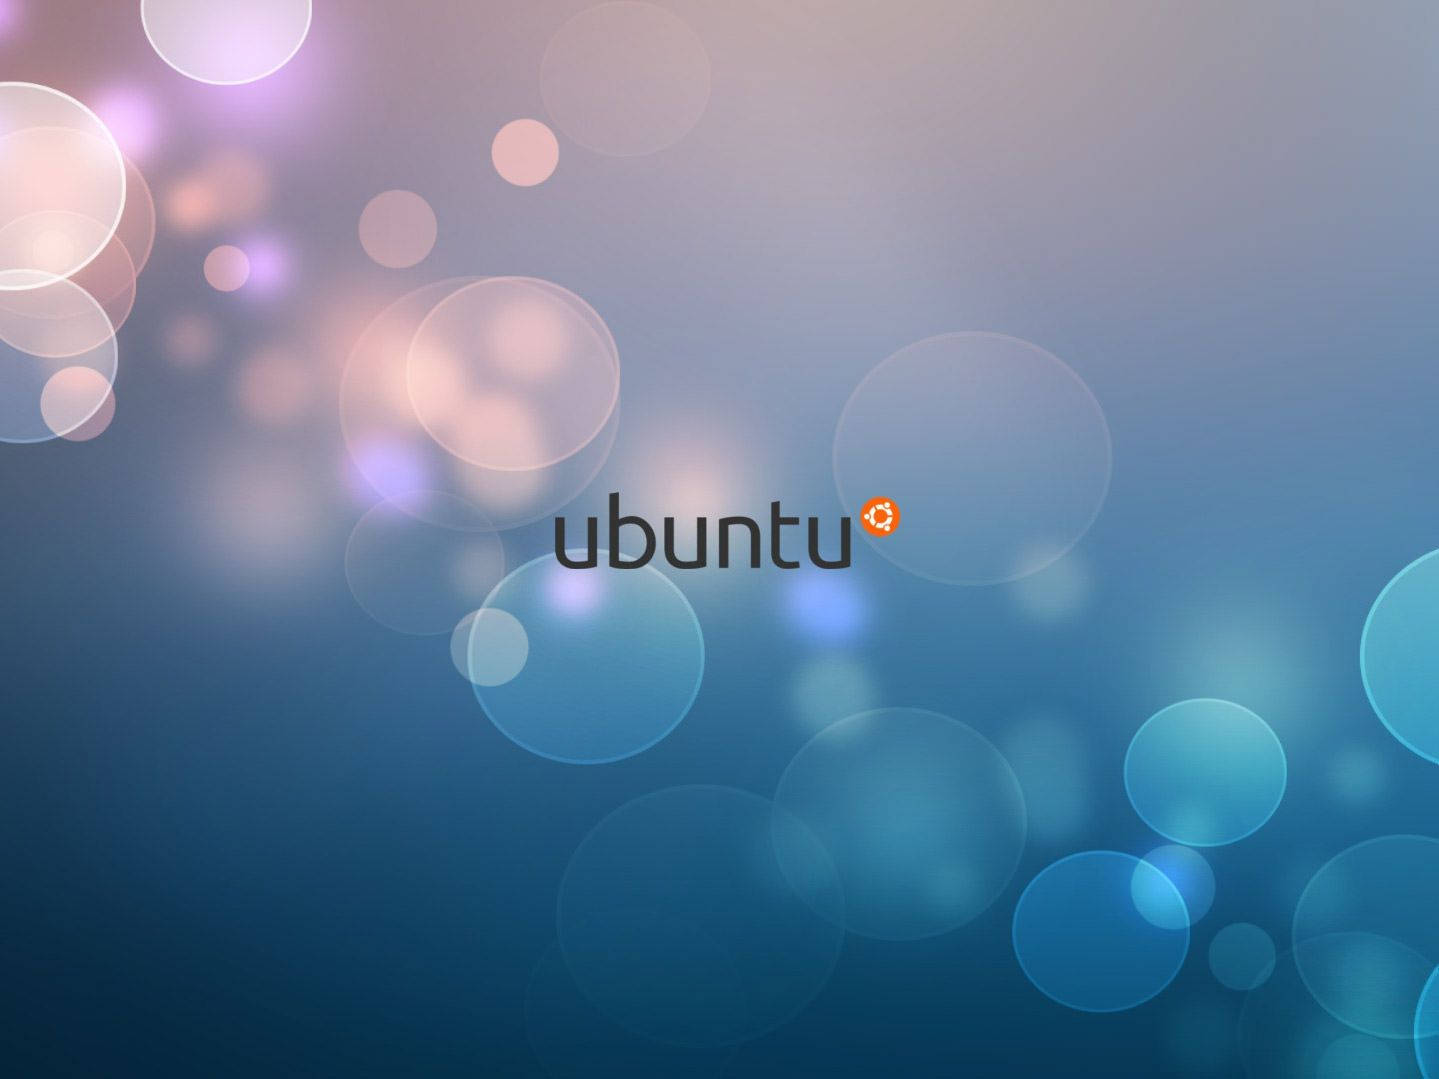 Ubuntu 1439X1079 Wallpaper and Background Image